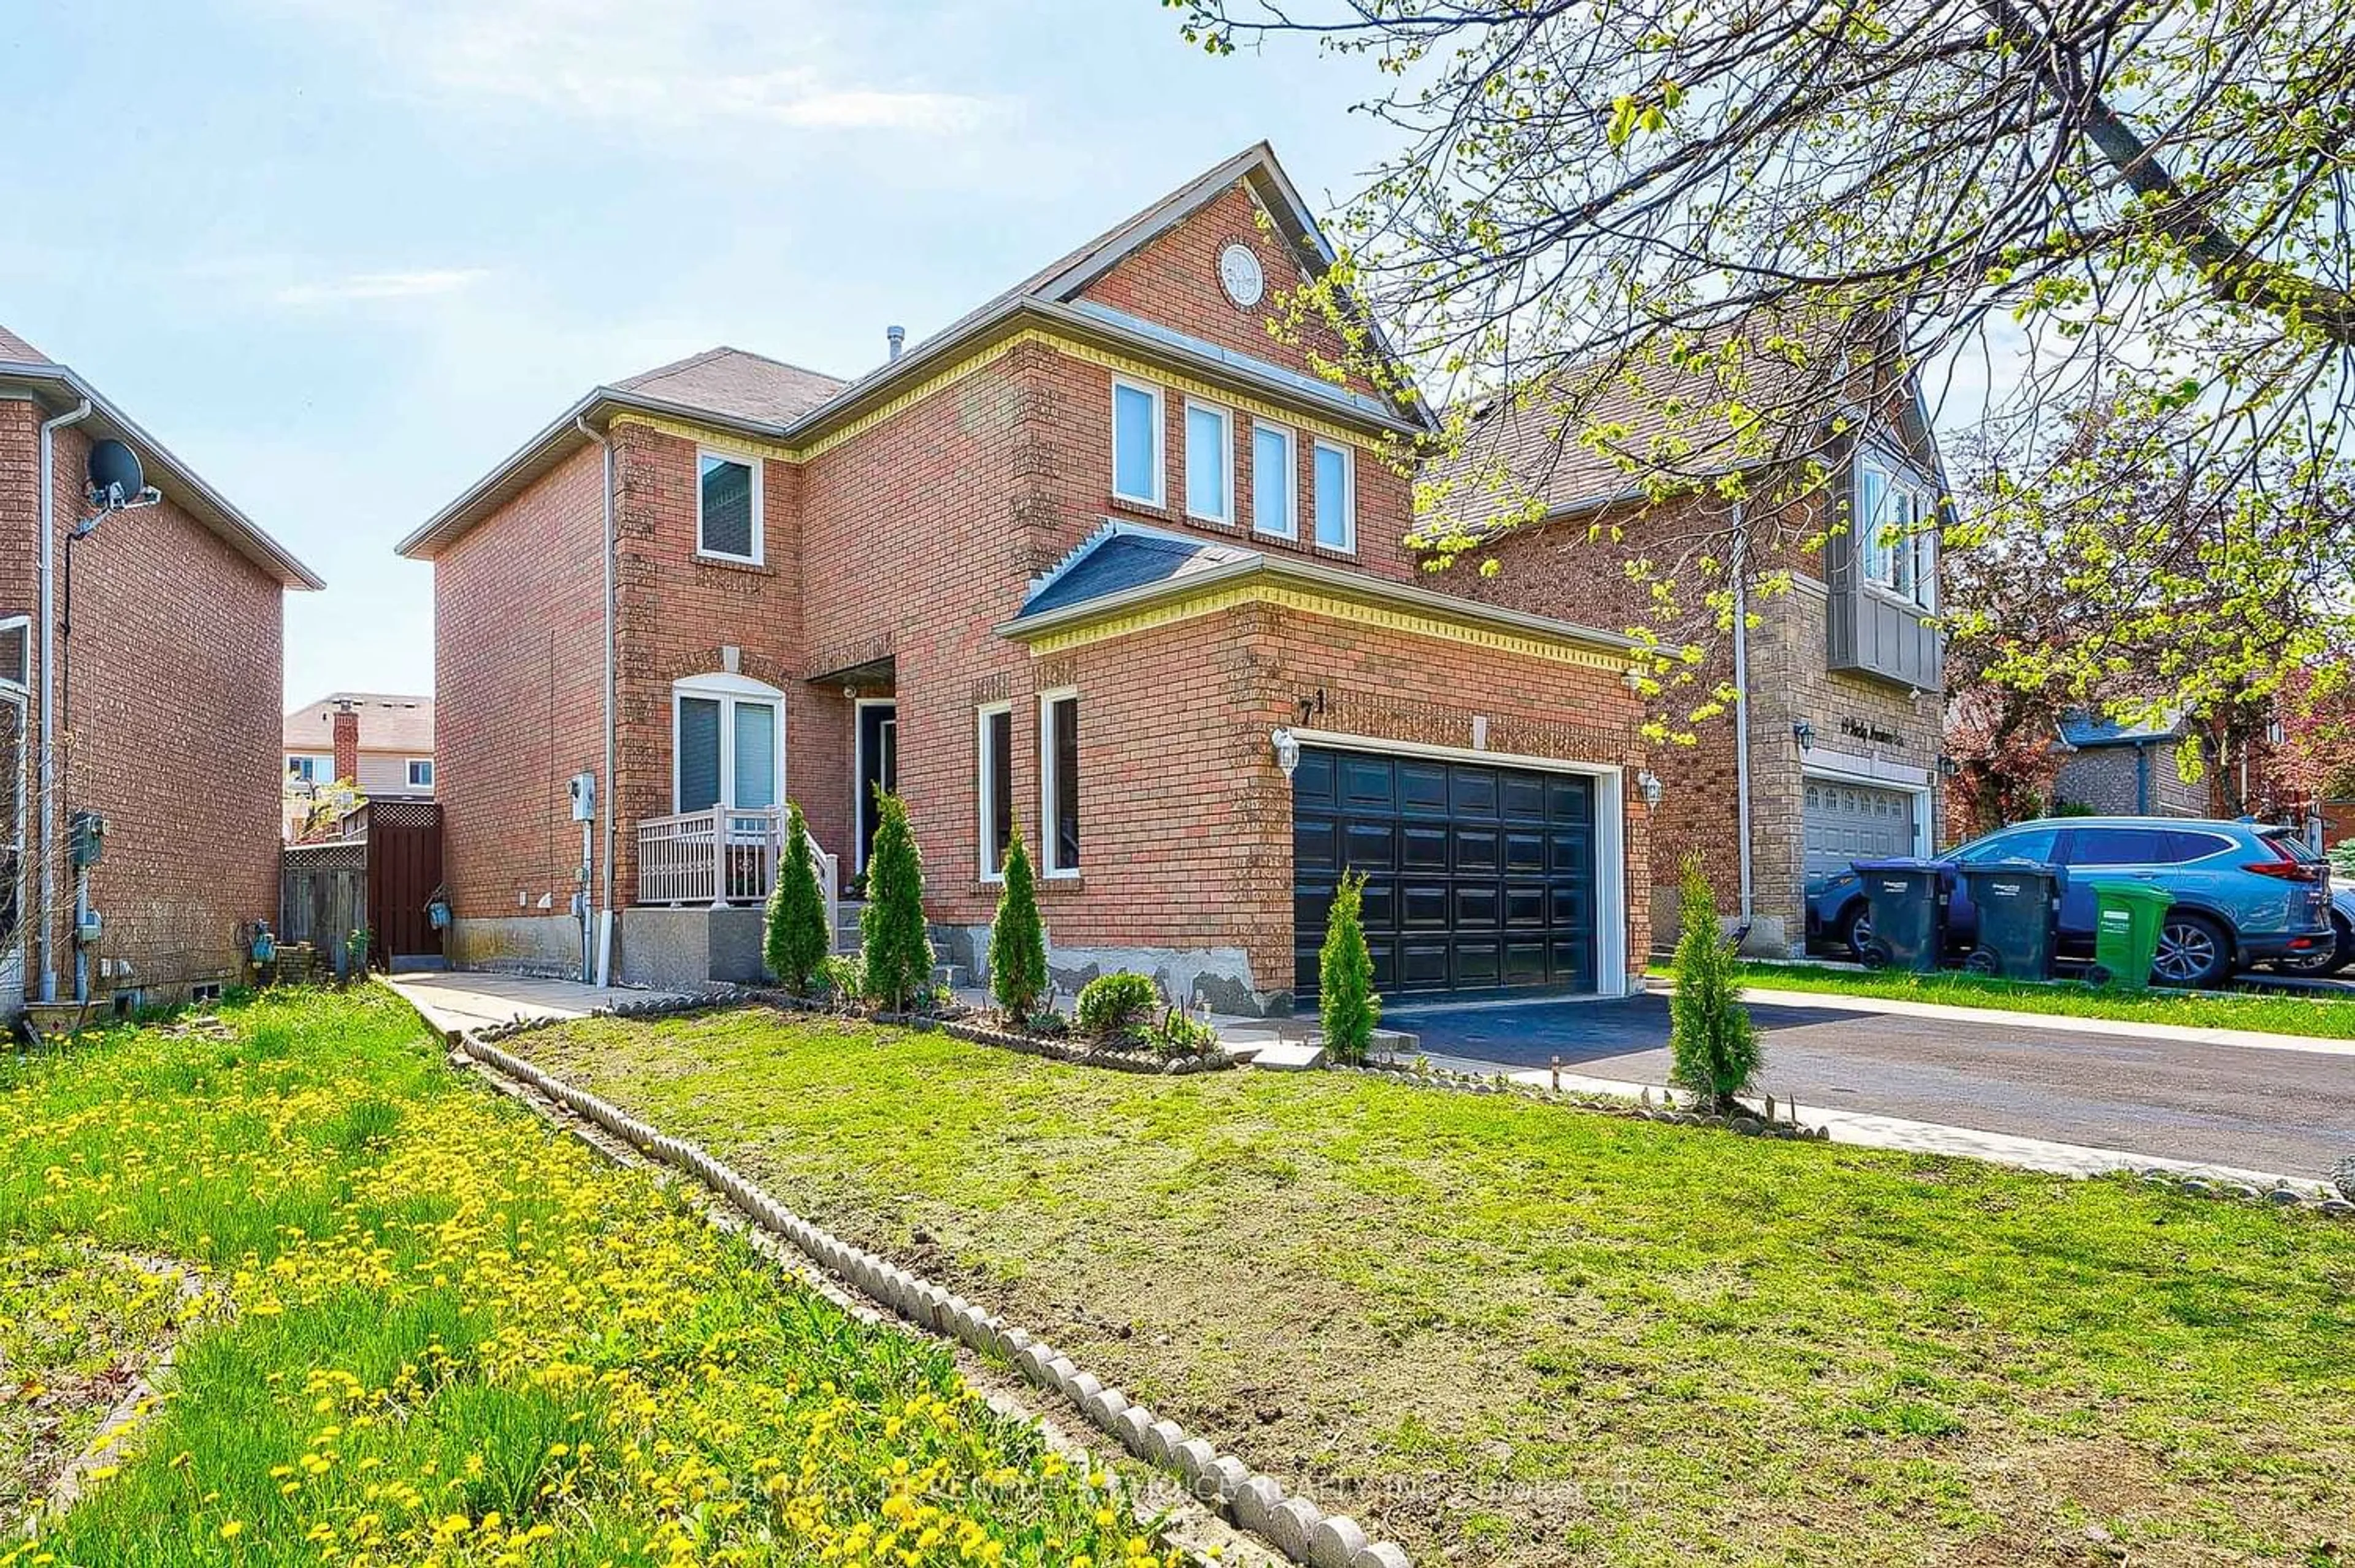 Home with brick exterior material for 71 Rocky Mountain Cres, Brampton Ontario L6R 1E7